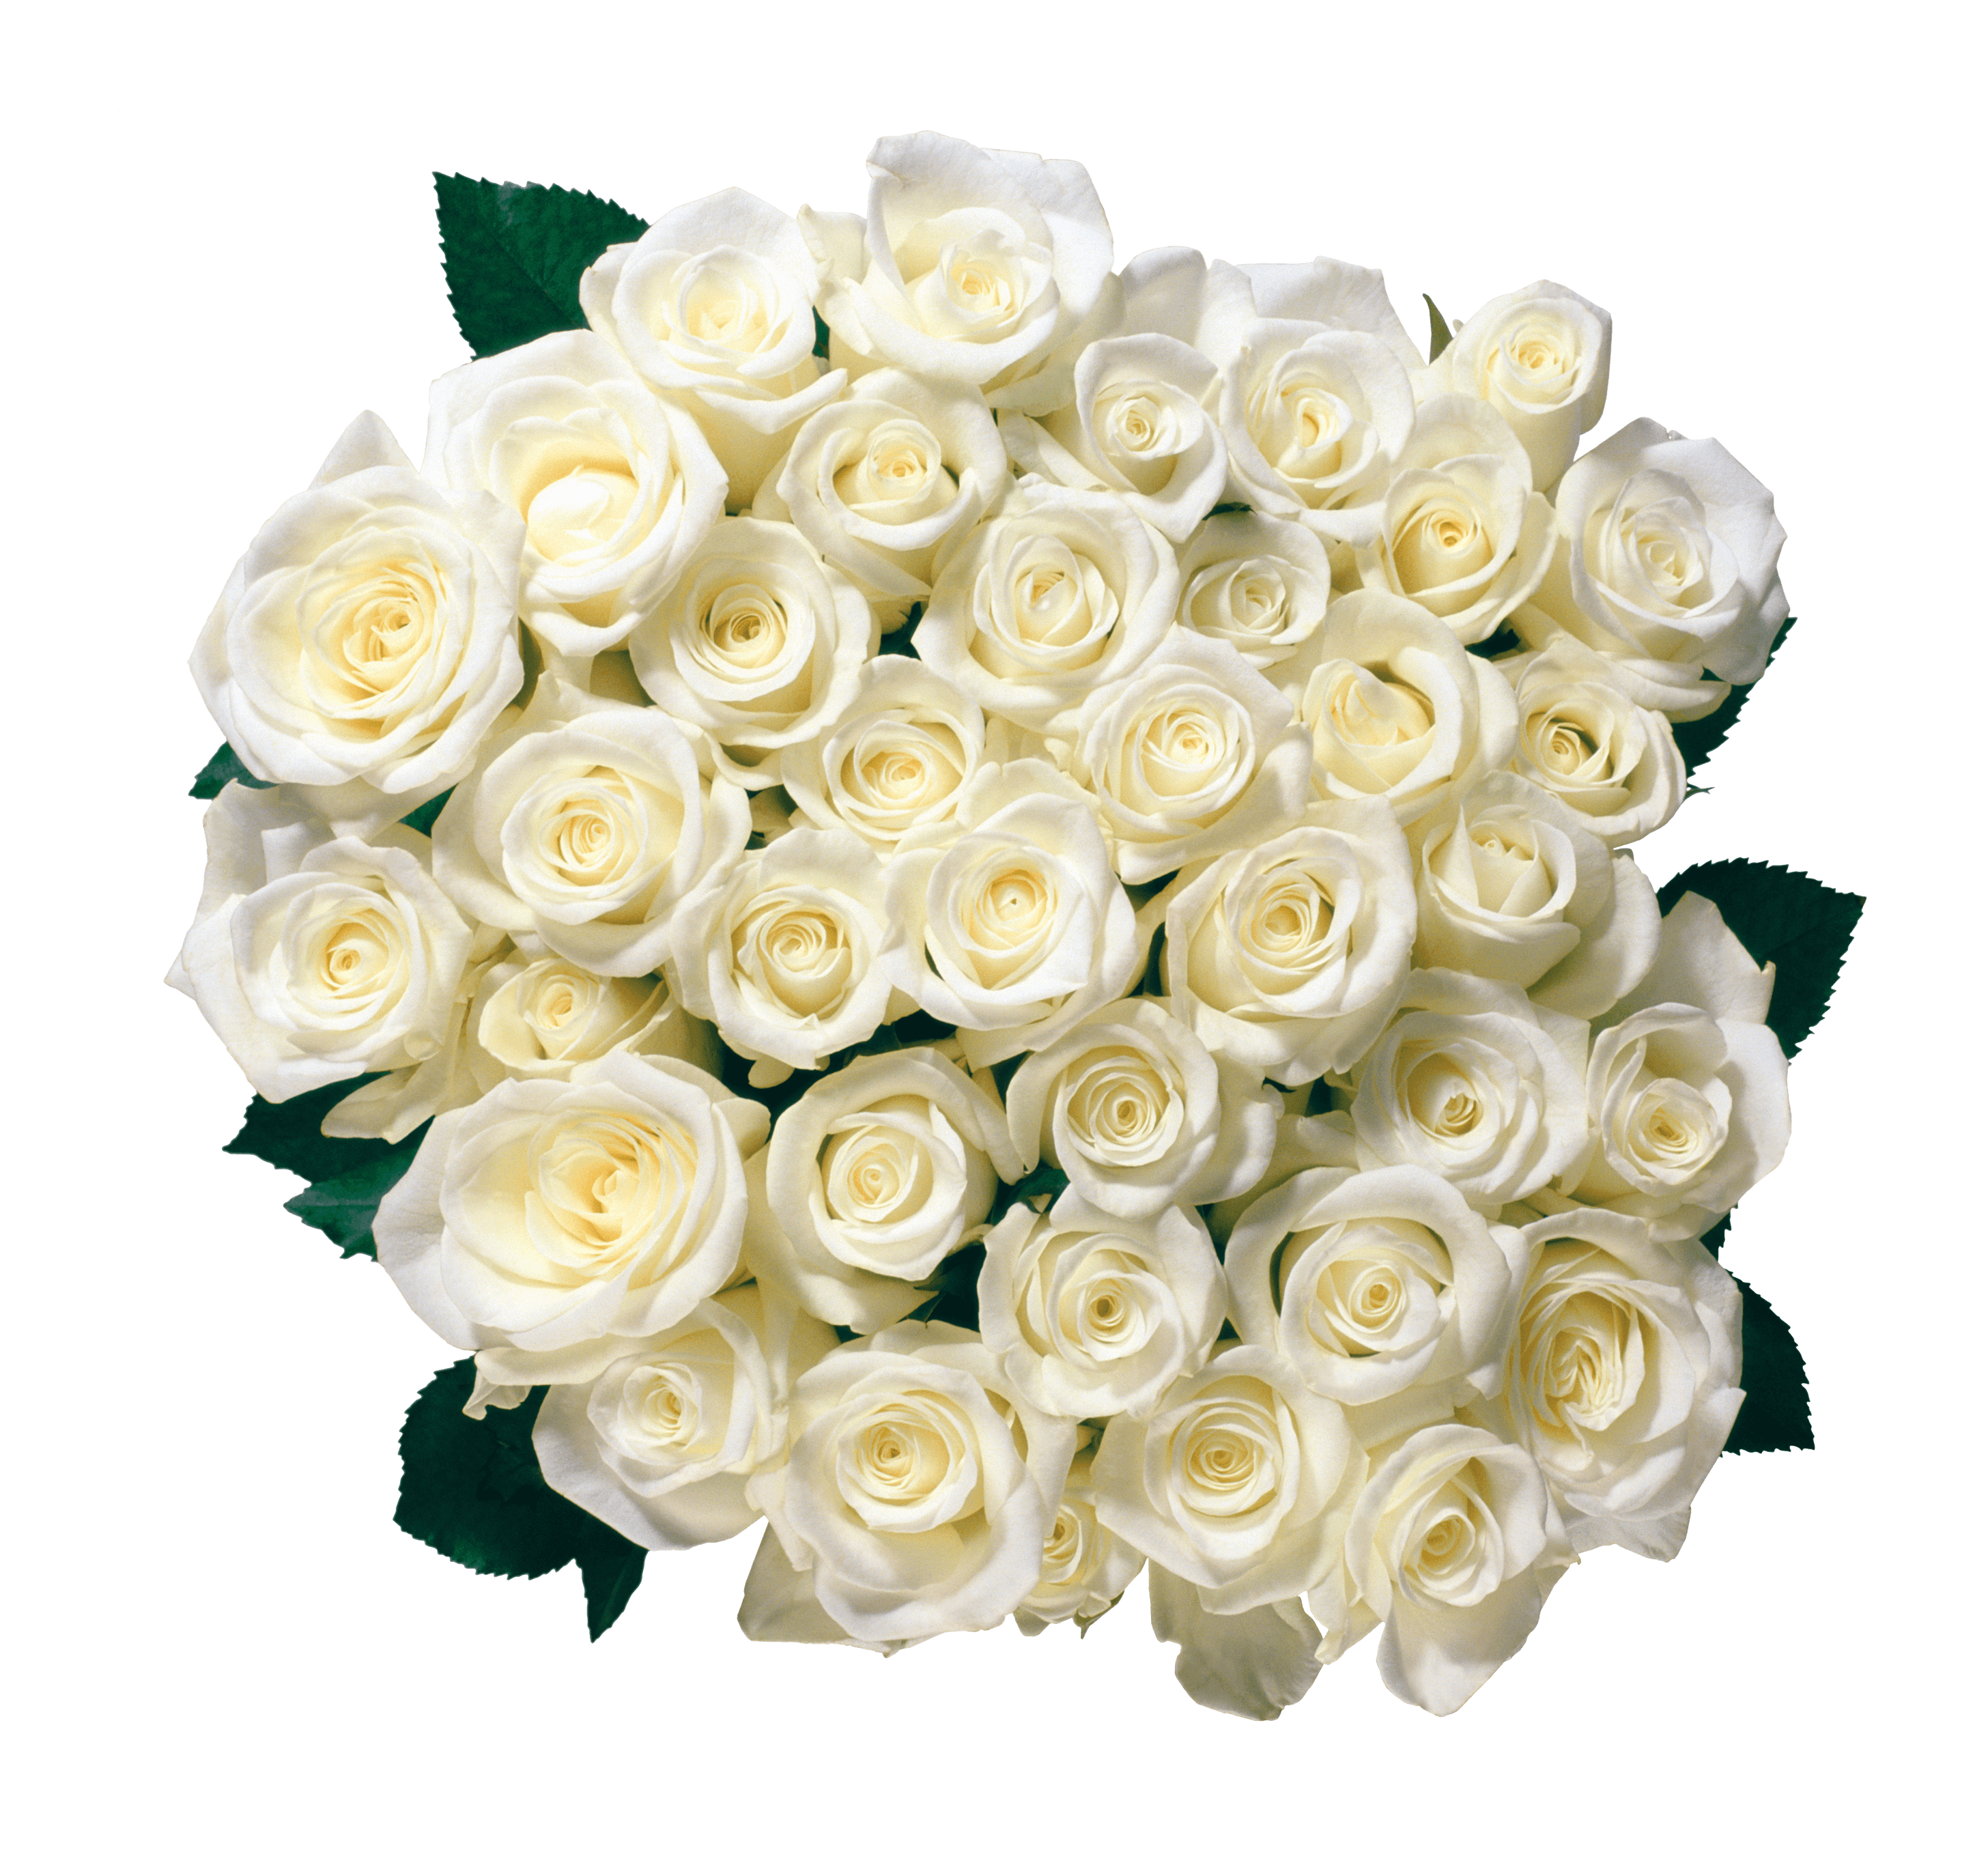 Bouquet Of White Roses Transparent PNG HD Image pngteam.com